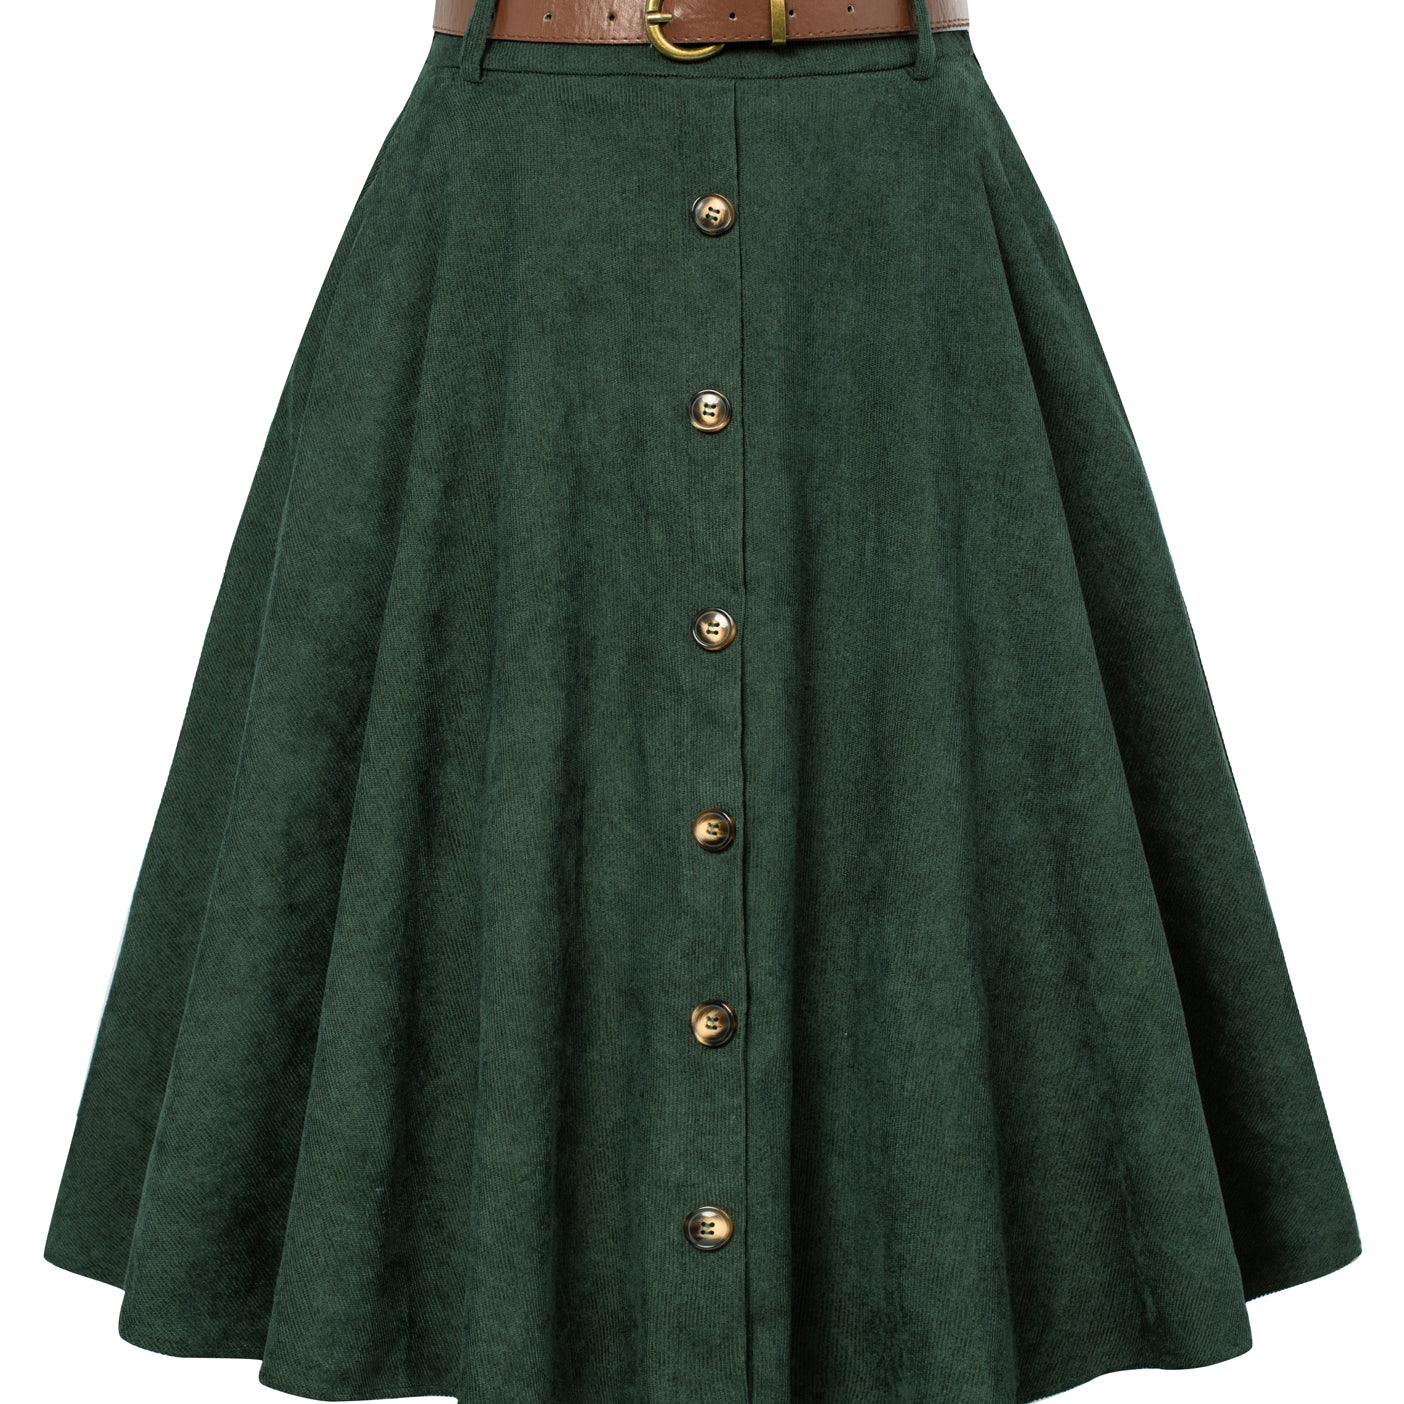 Corduroy Skirt with Belt Elastic High Waist Mid-Calf Swing Skirt